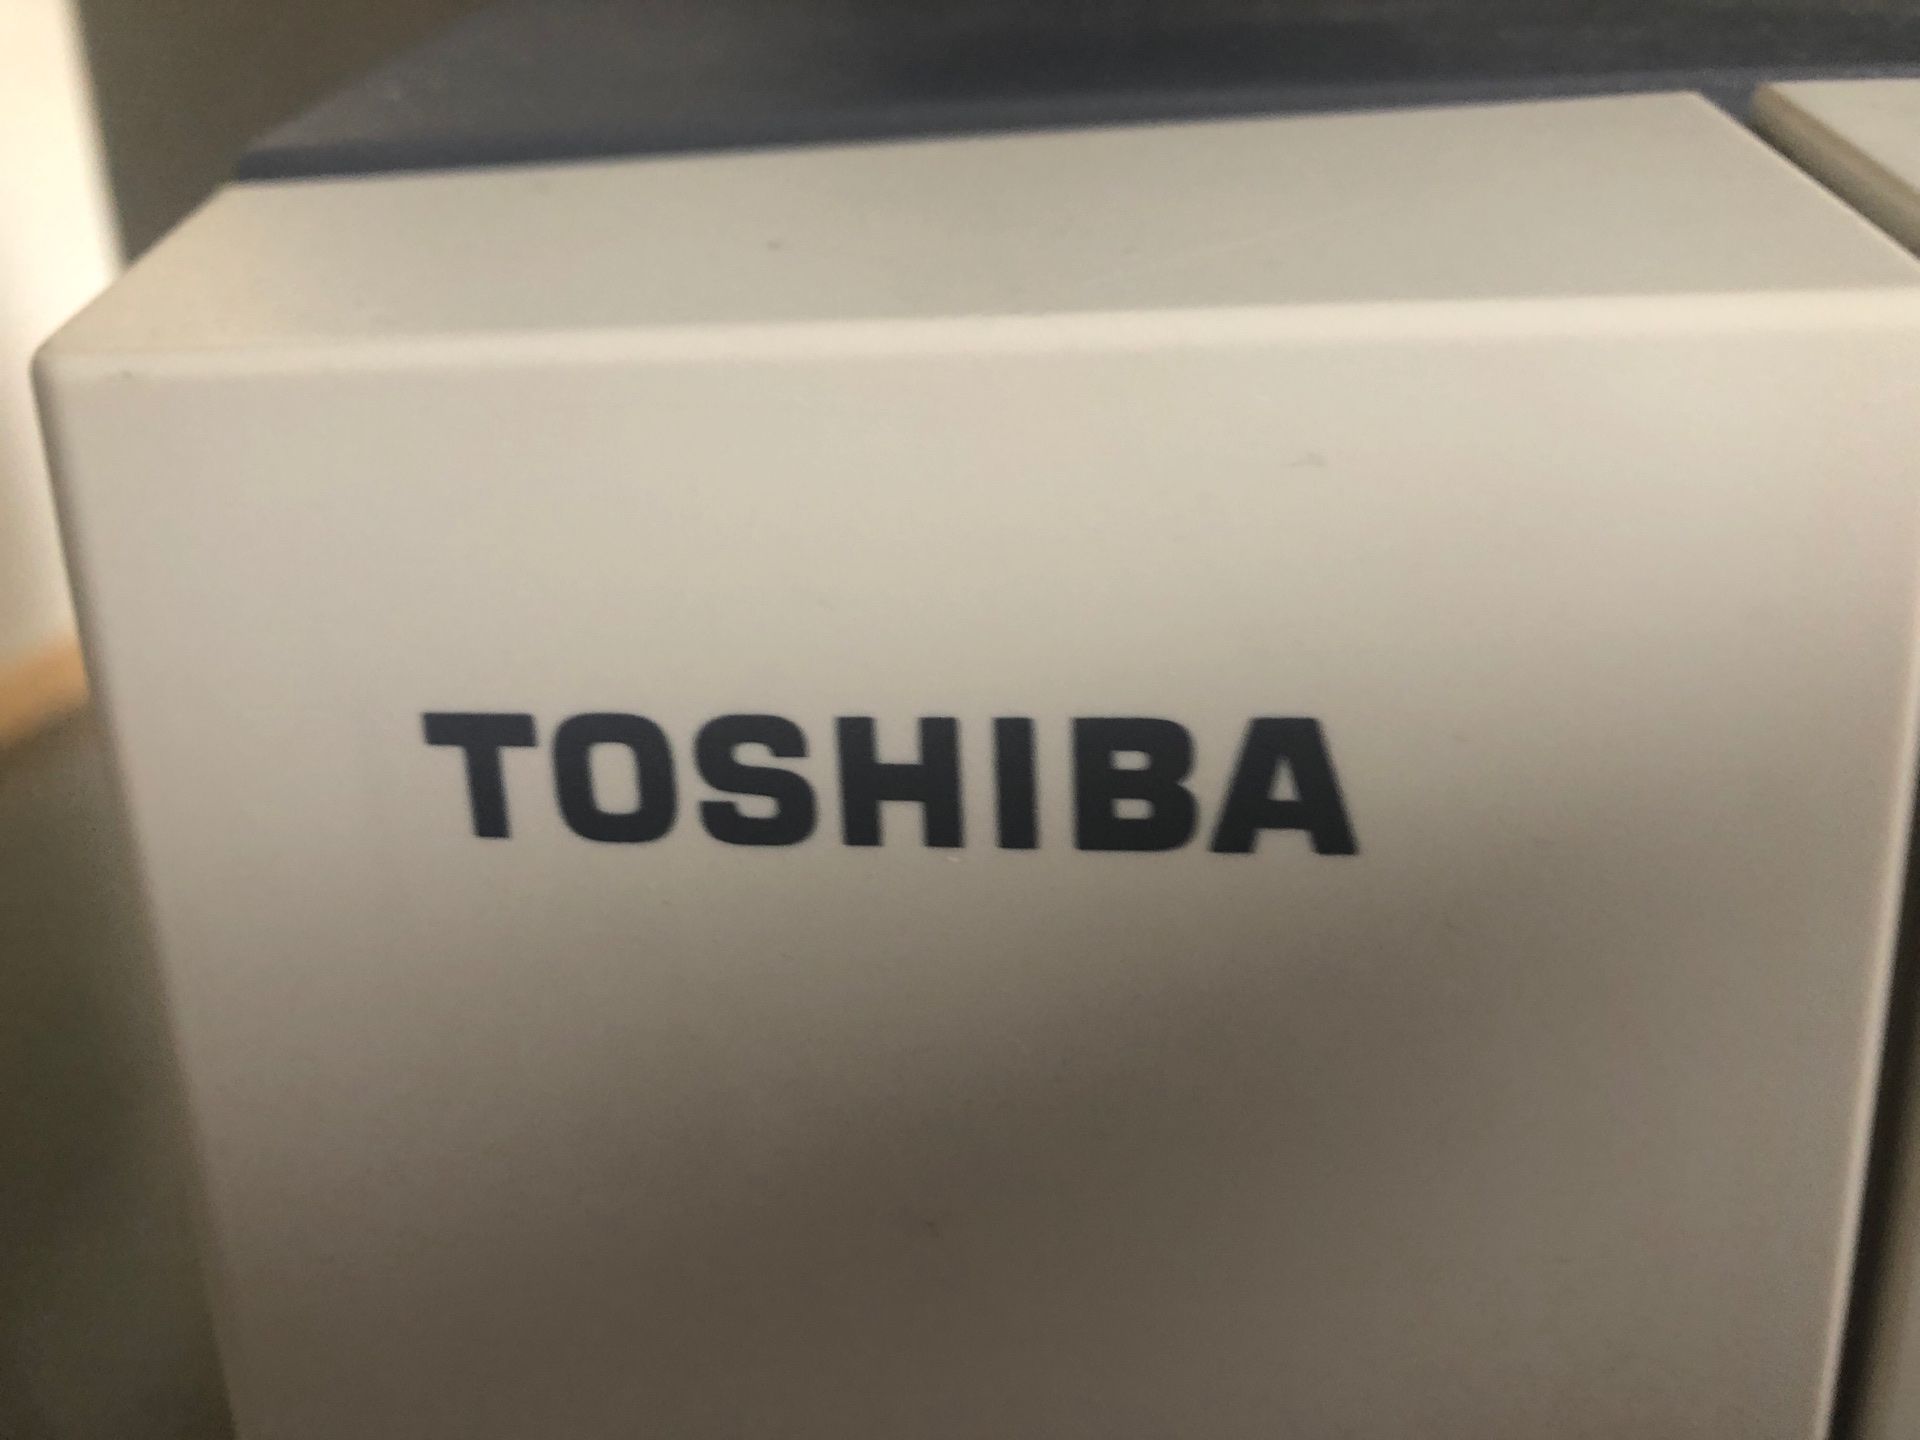 Professional office printer